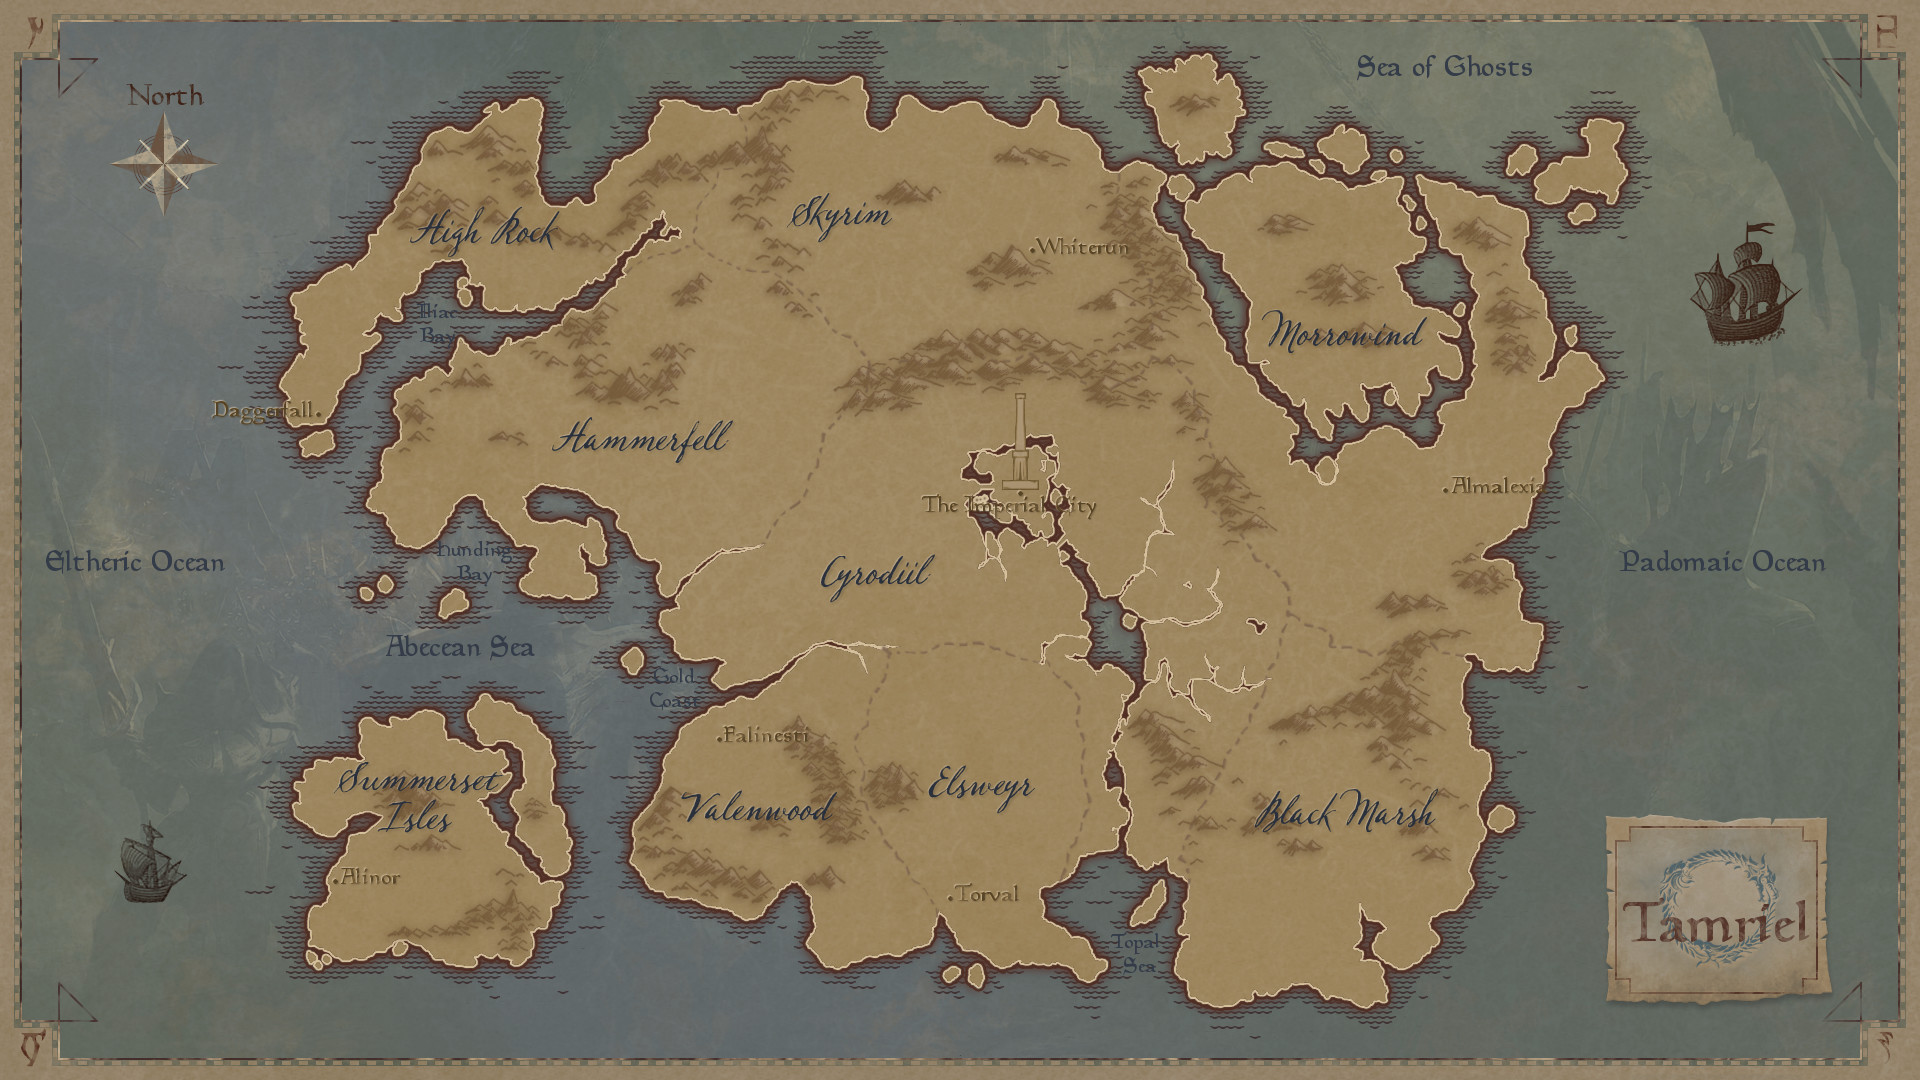 Tamriel Map Wallpaper Image